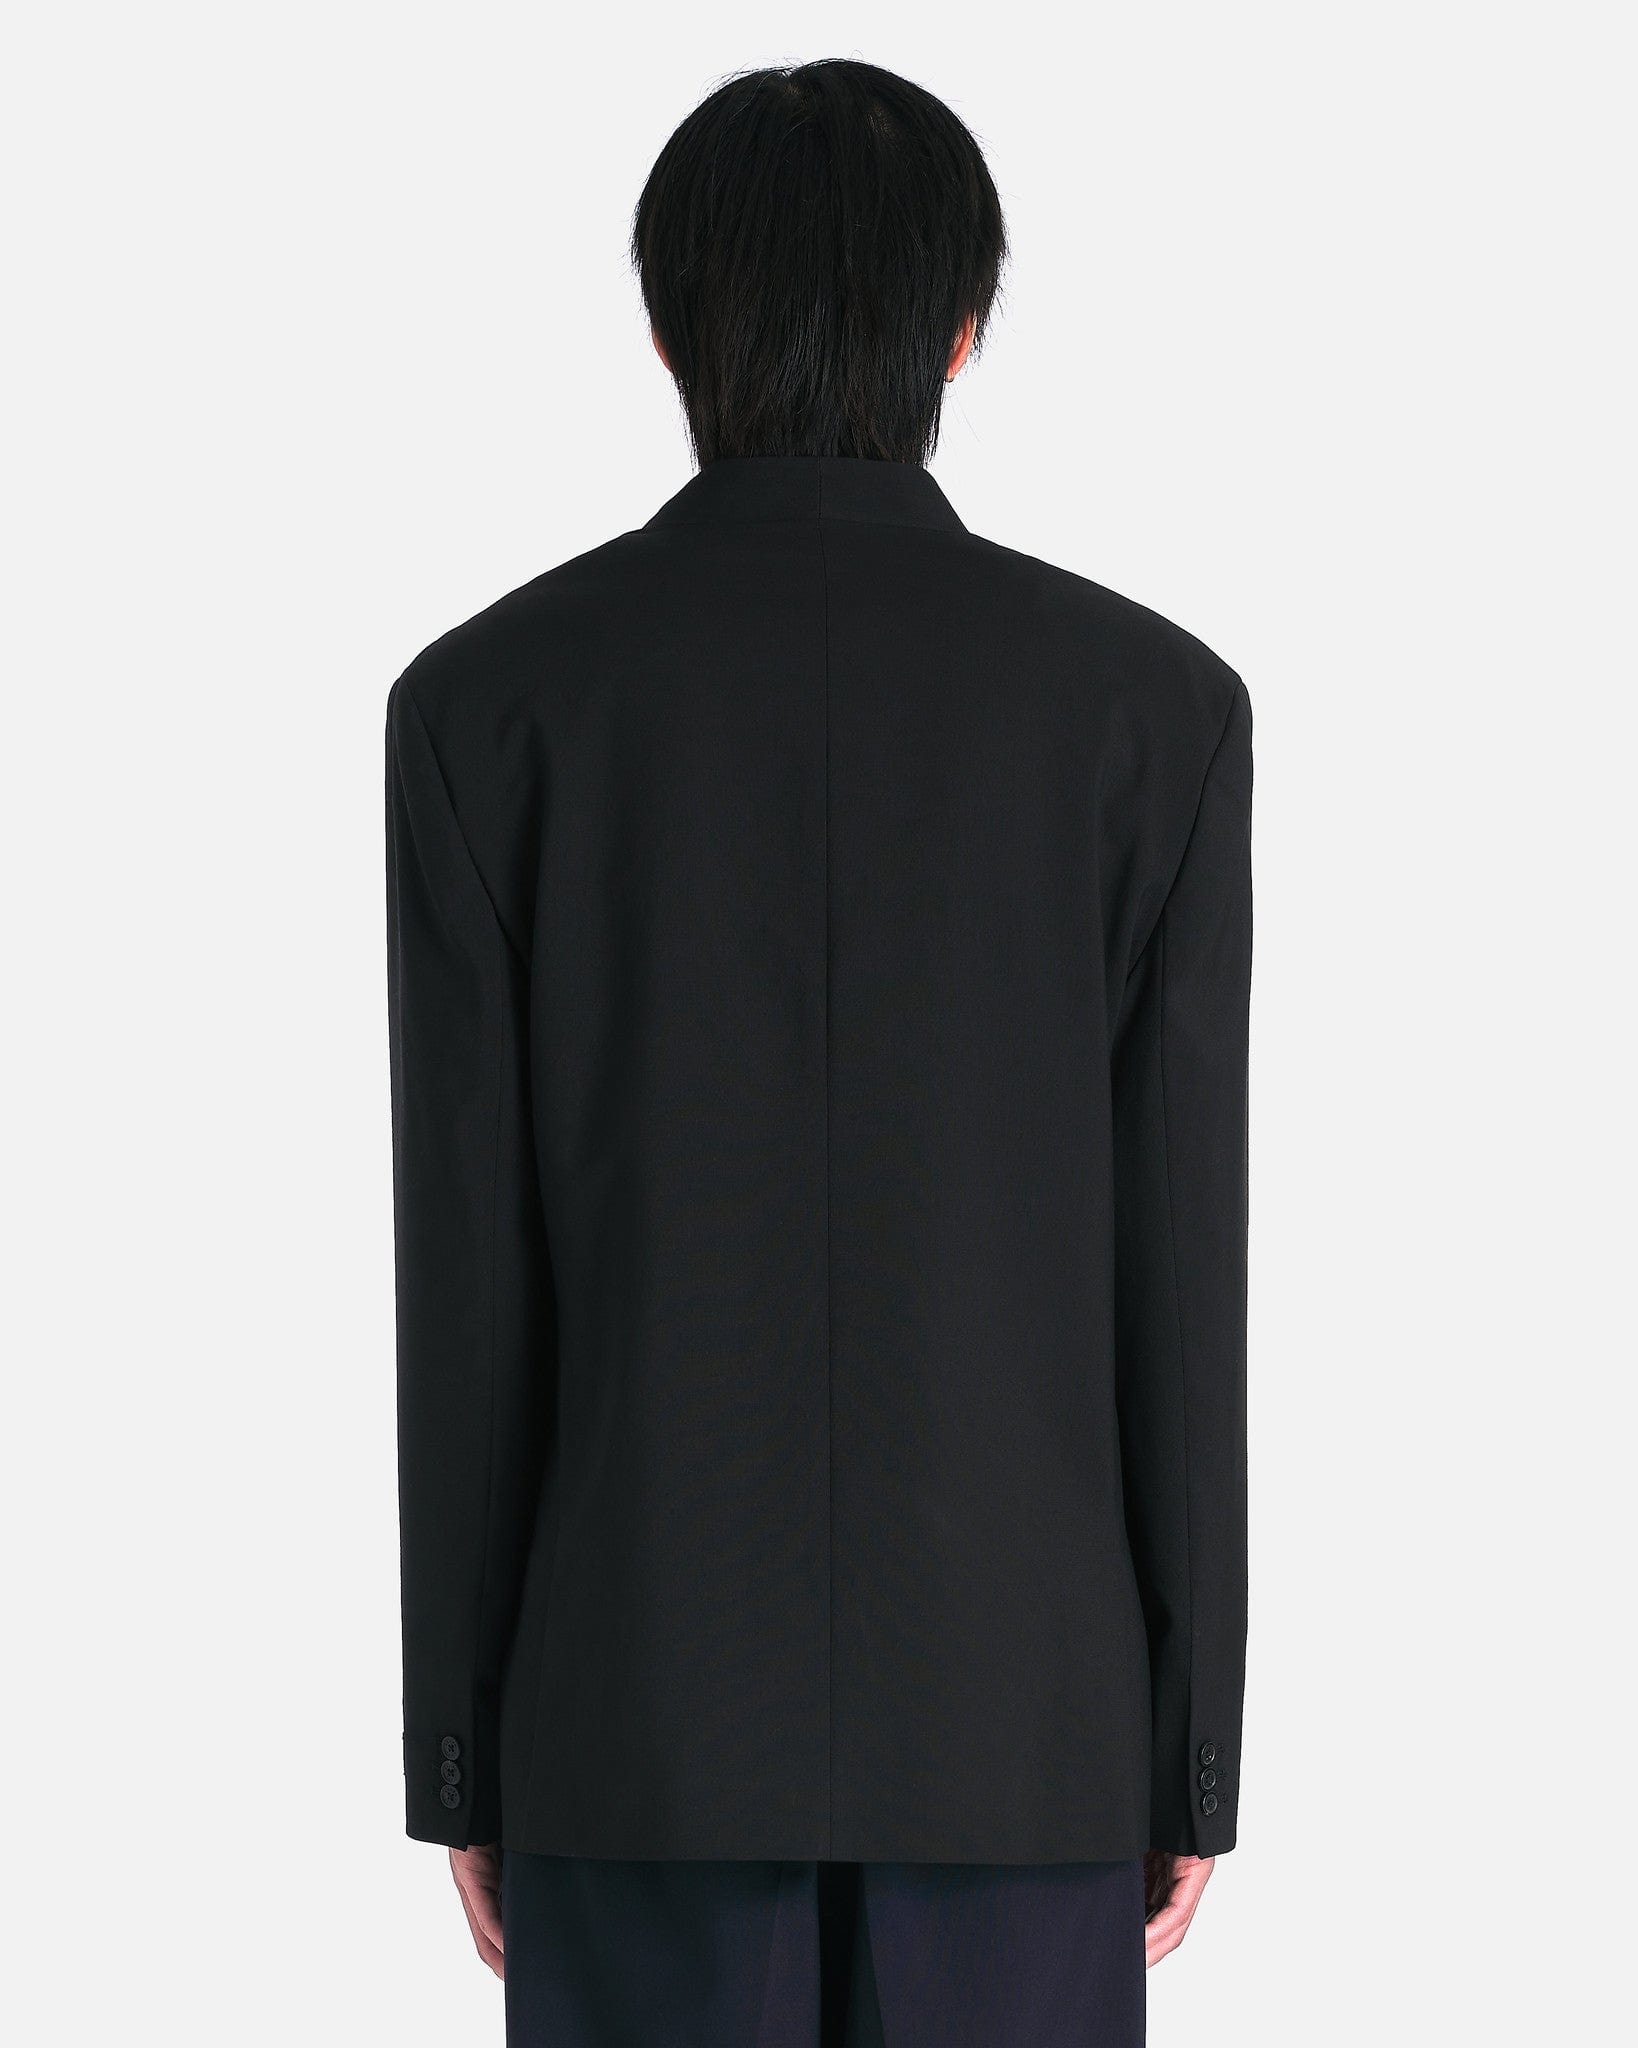 KENZO Men's Jackets Kimono Tailored Jacket in Black